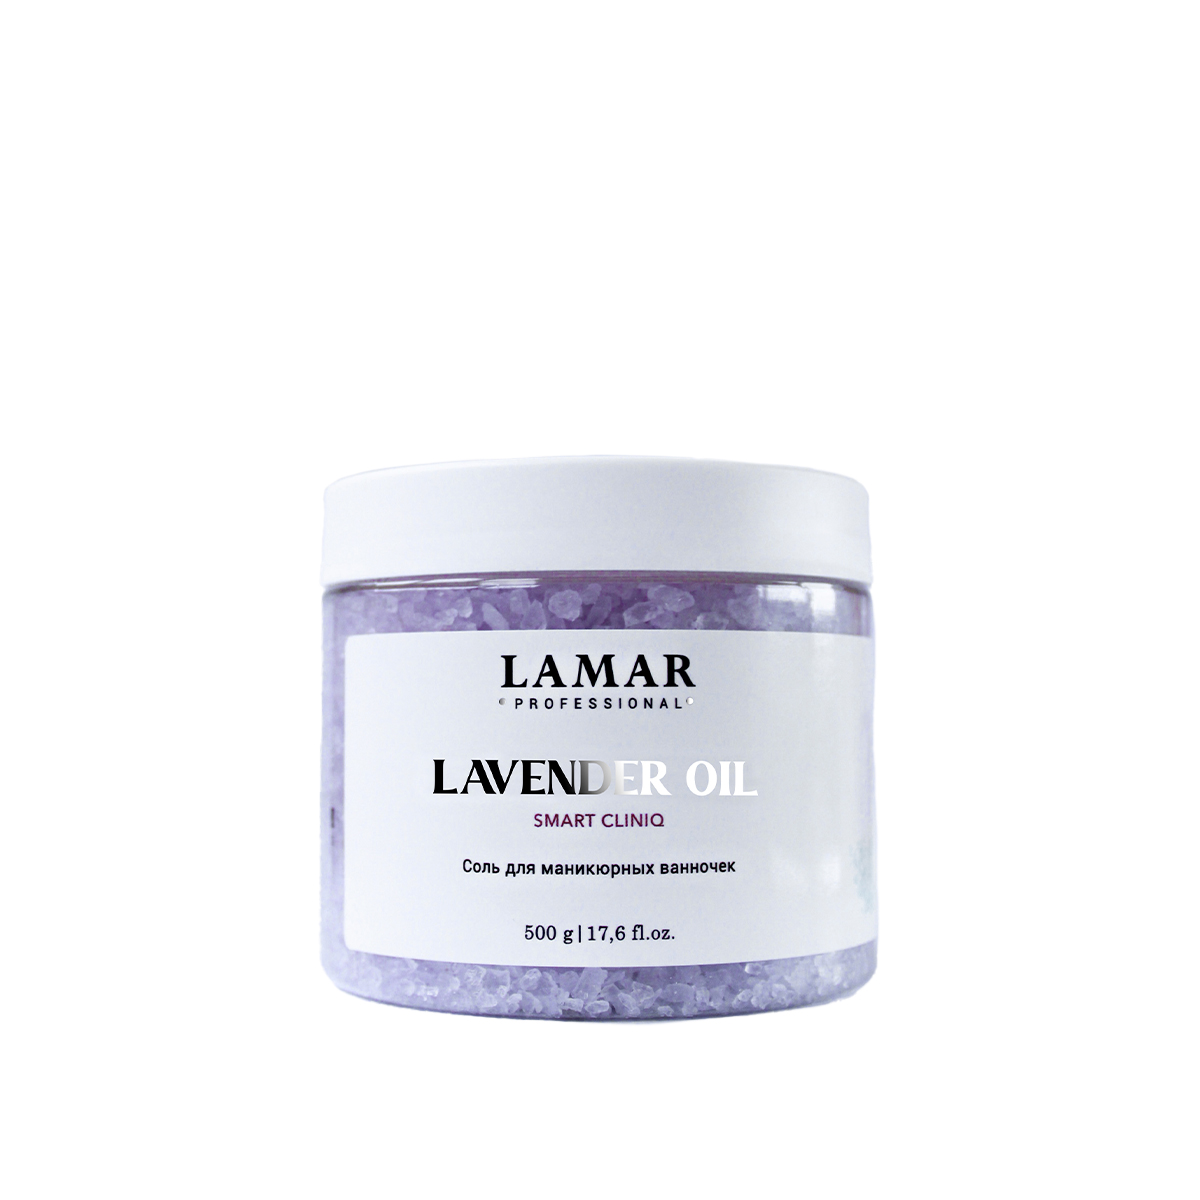 Соль для маникюрных ванночек Lamar Professional Lavender oil 500 г